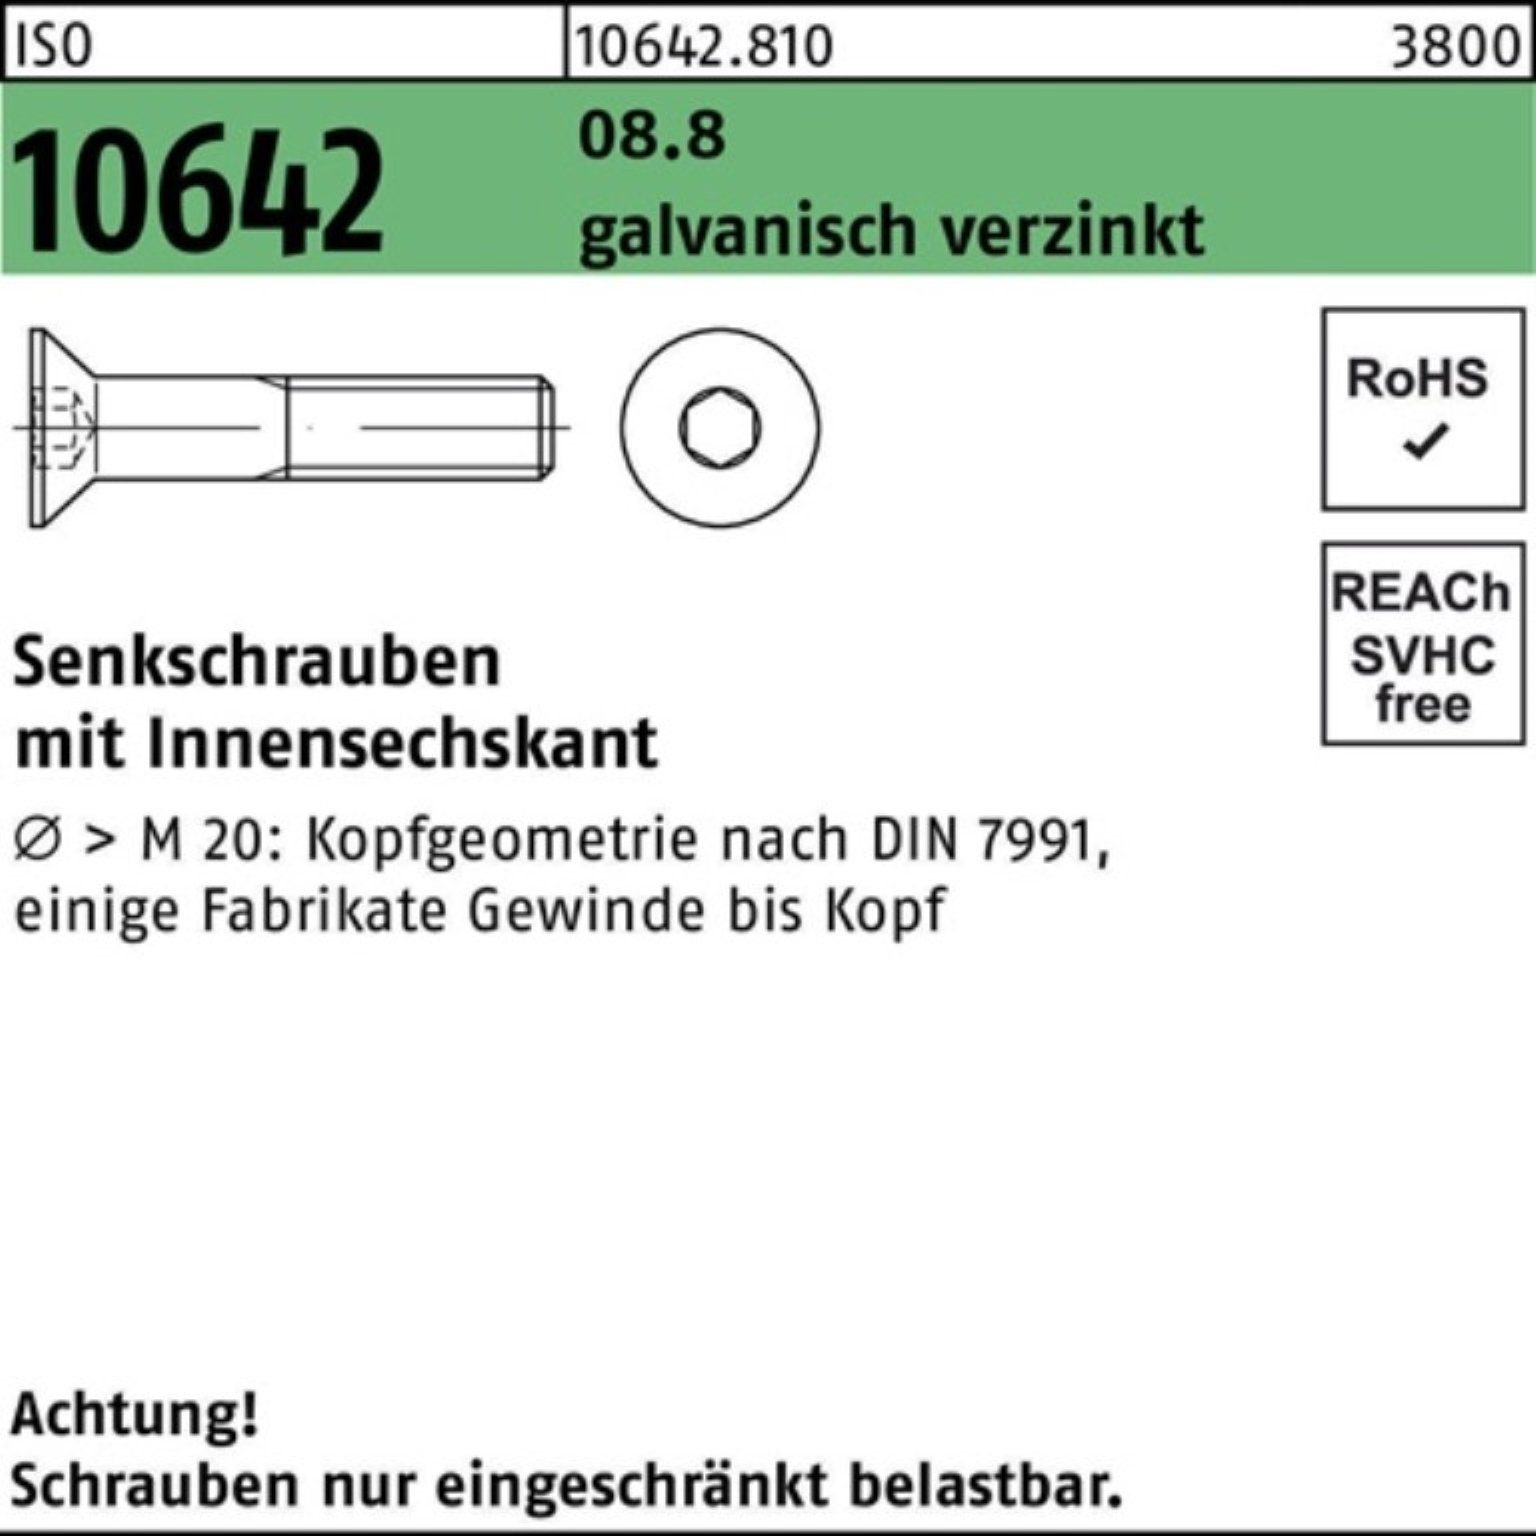 Reyher Senkschraube 100er Pack 8.8 10642 110 galv.verz. Senkschraube M8x 100 ISO Innen-6kt